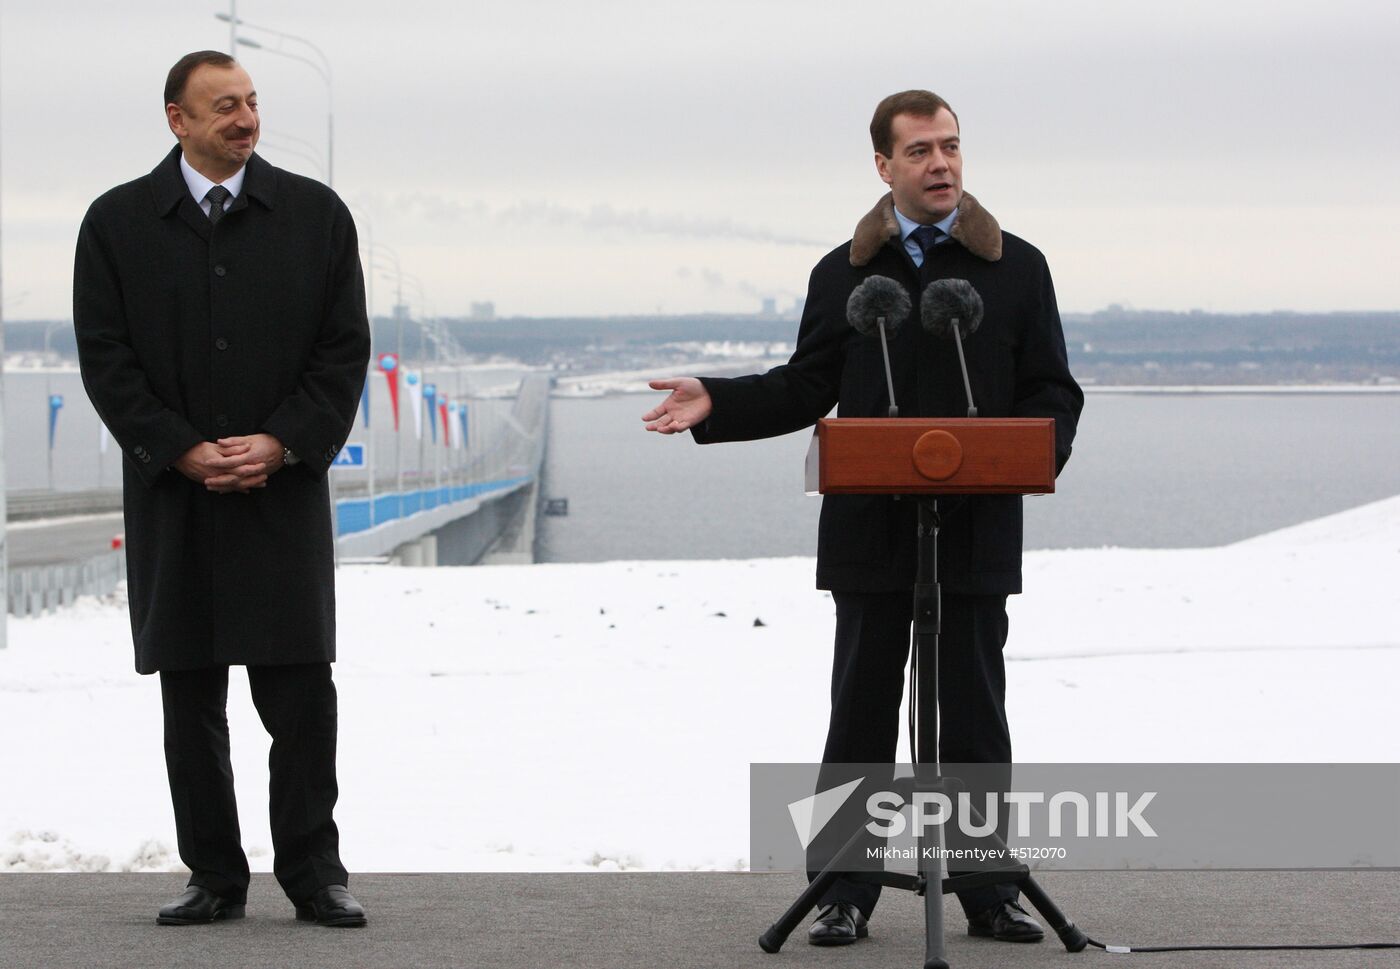 Dmitry Medvedev in the Volga Federal District